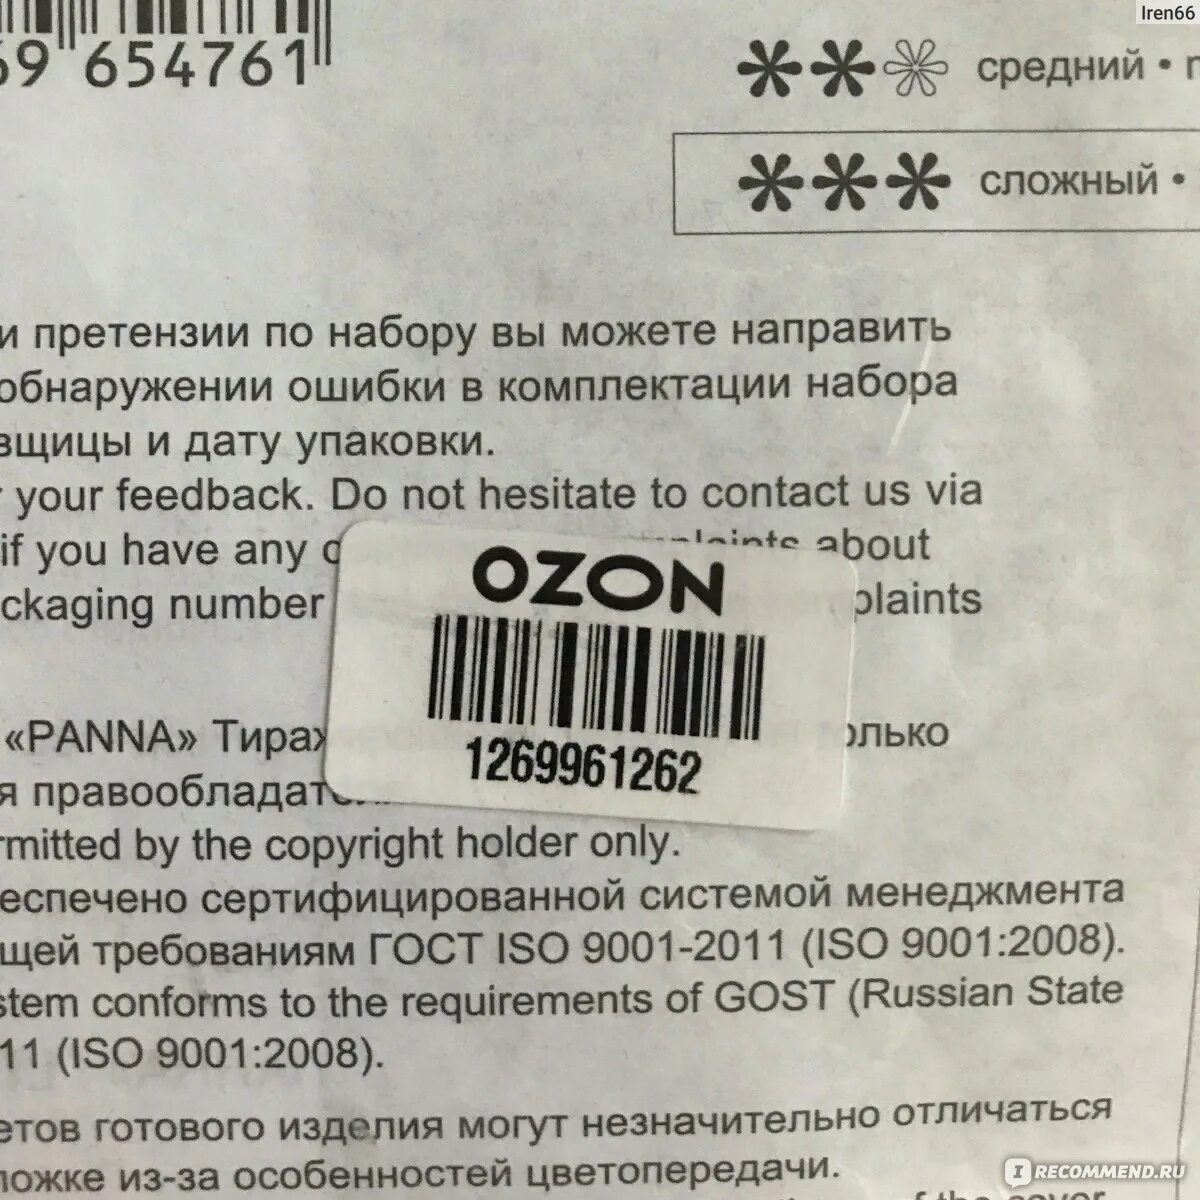 Этикетка на товар для озона. Штрихкод Озон требования. OZON этикетка штрих код. Требования к этикетке Озон. Этикетка товара для озон